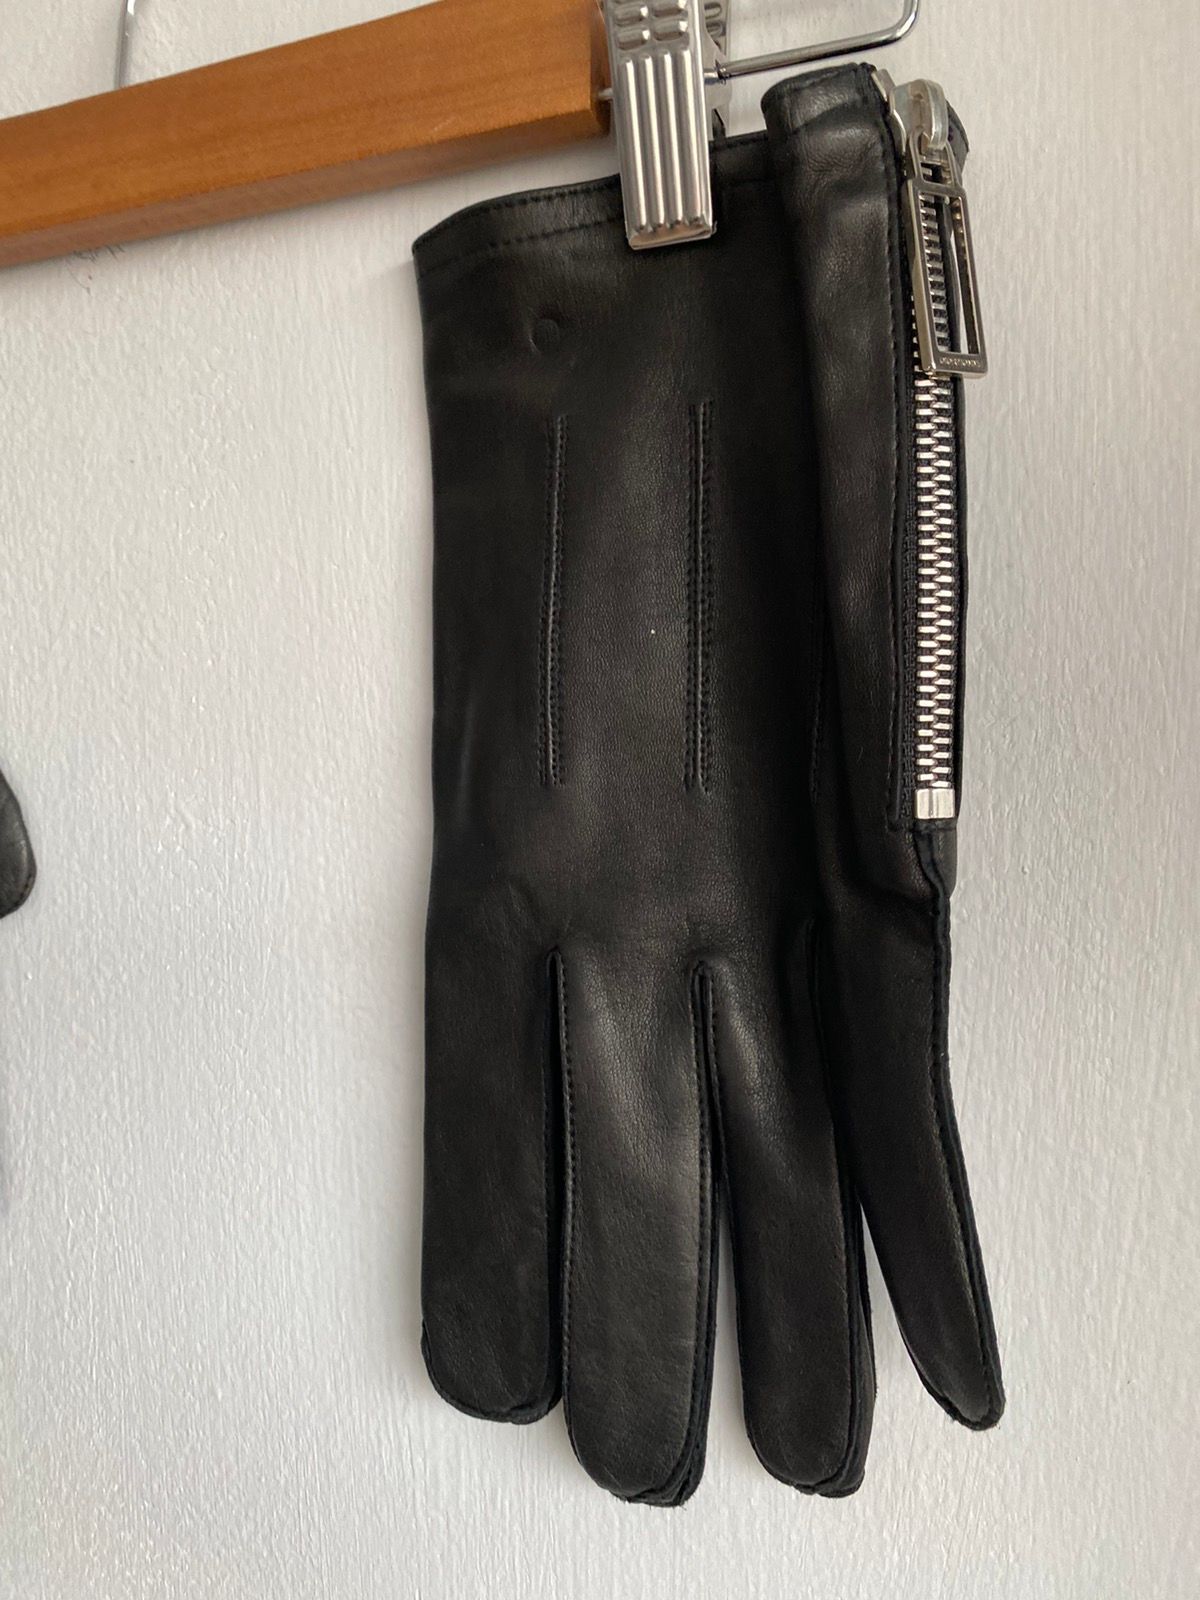 Dior Homme NEW Black Leather & Silk Gloves $2000